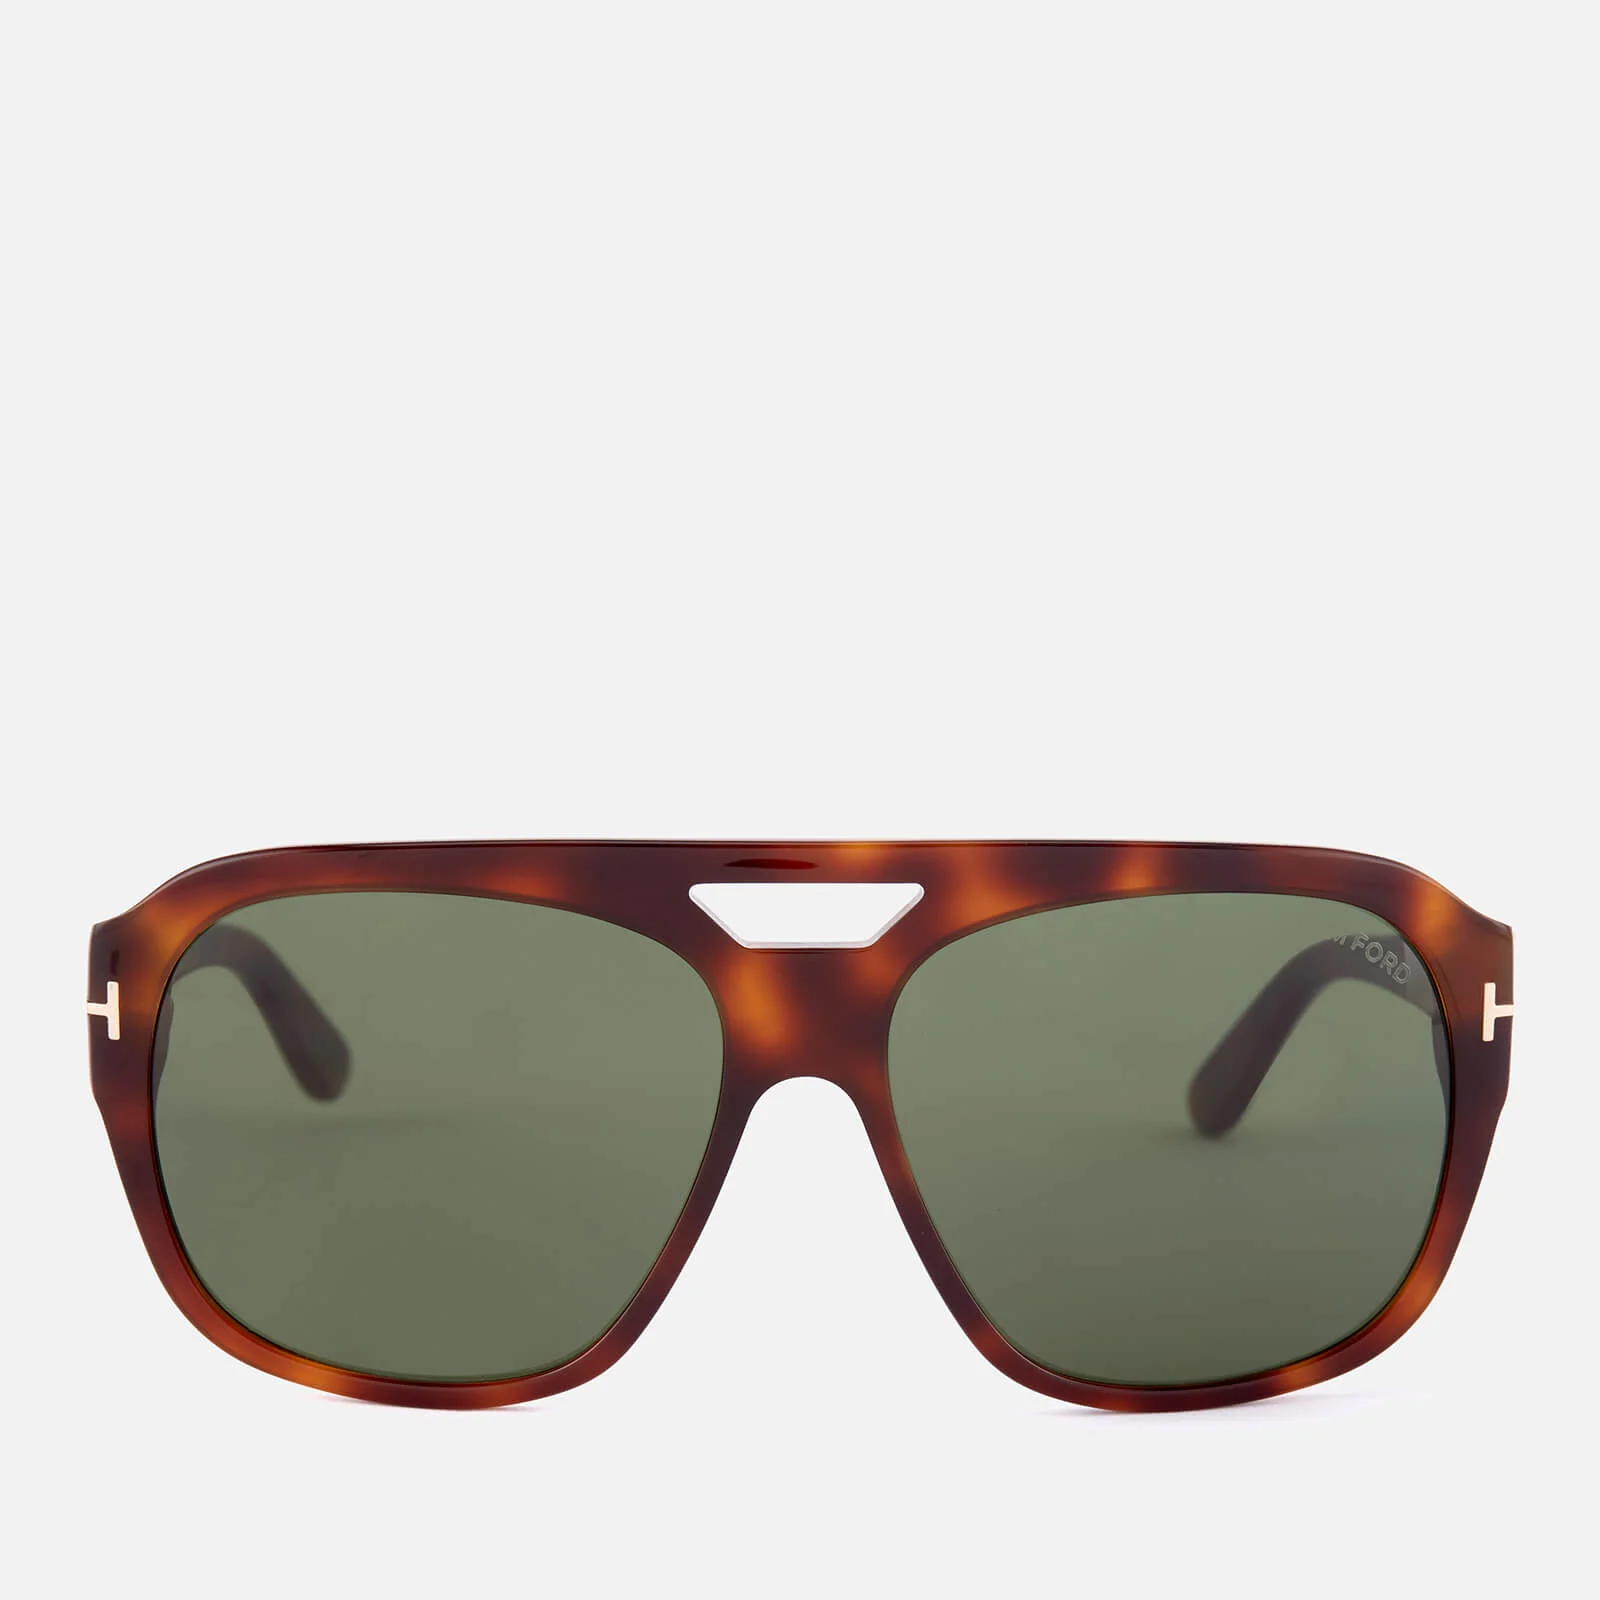 Tom Ford Men's Bachardy Sunglasses - Dark Havana/Green Image 1